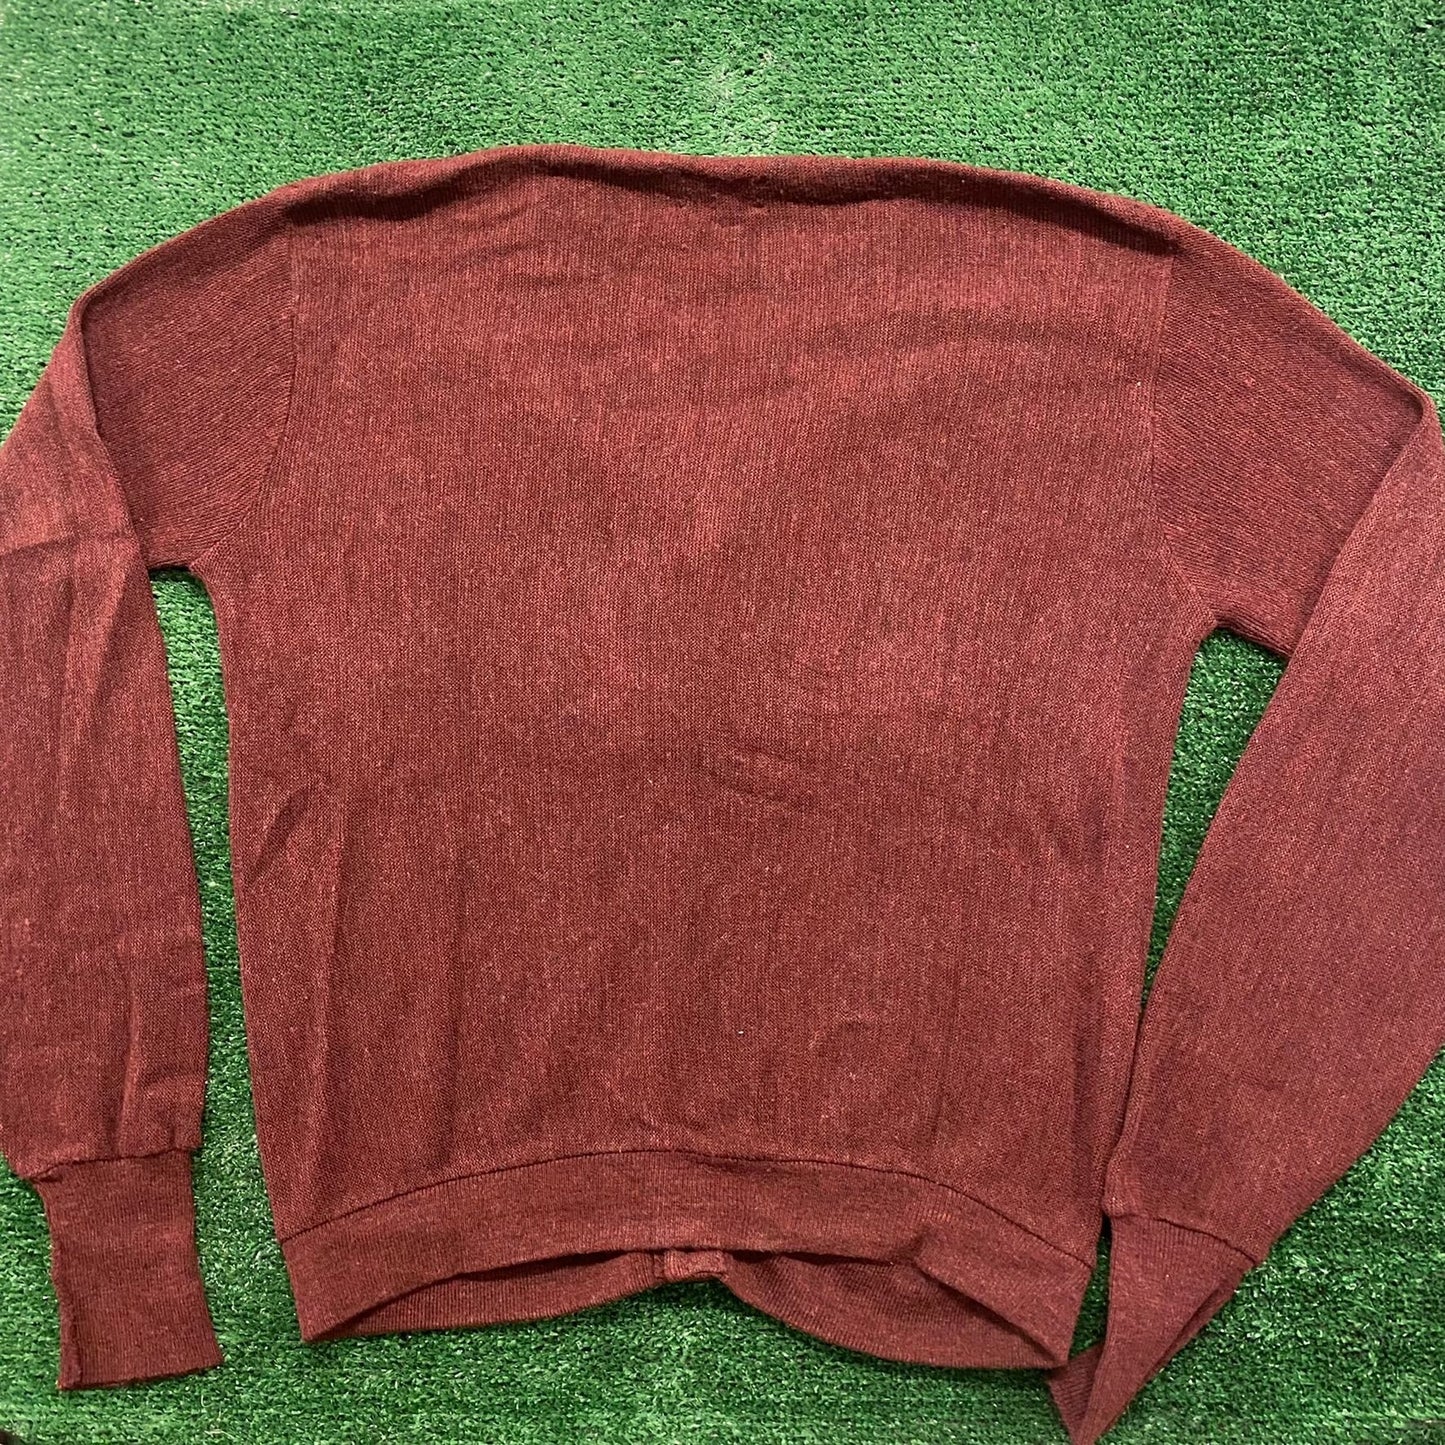 IZOD Lacoste Vintage 80s Knit Cardigan Sweater